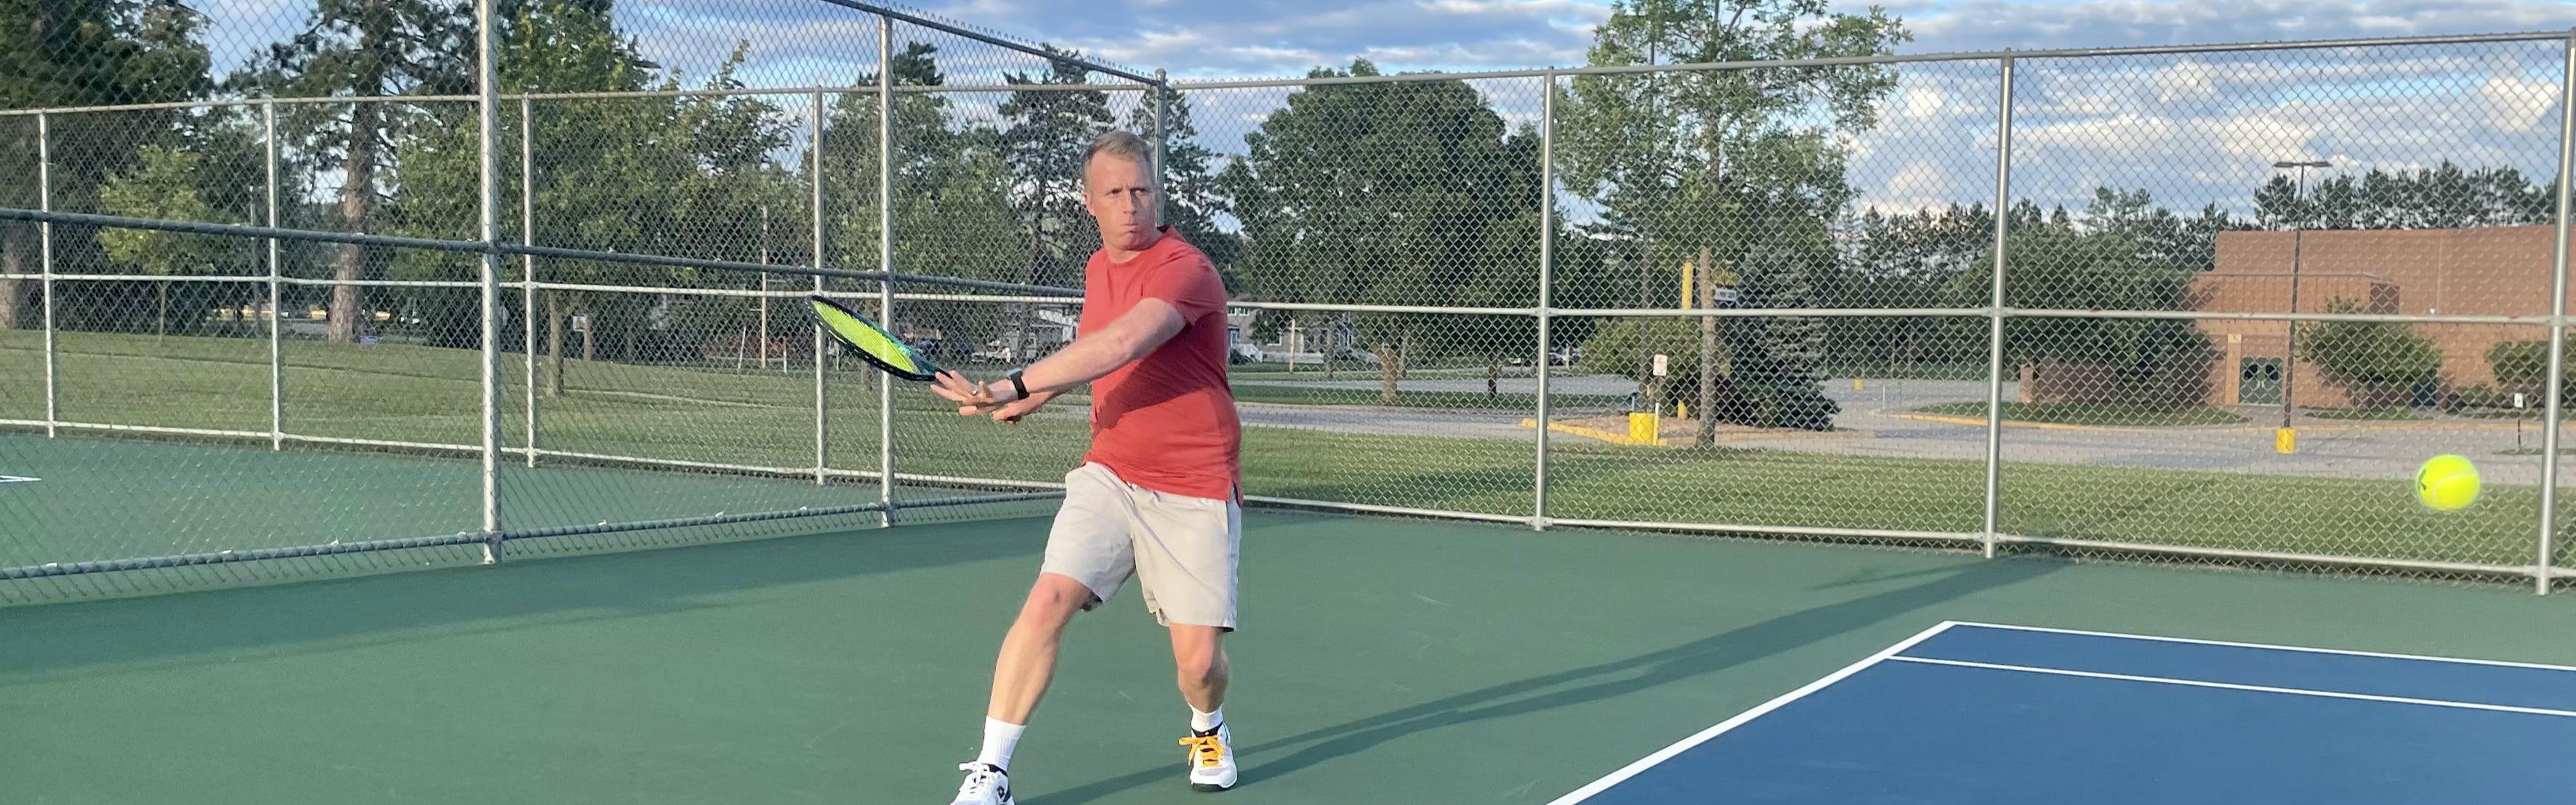 A man on a tennis court uses the Yonex VCORE Pro 97 Racquet.